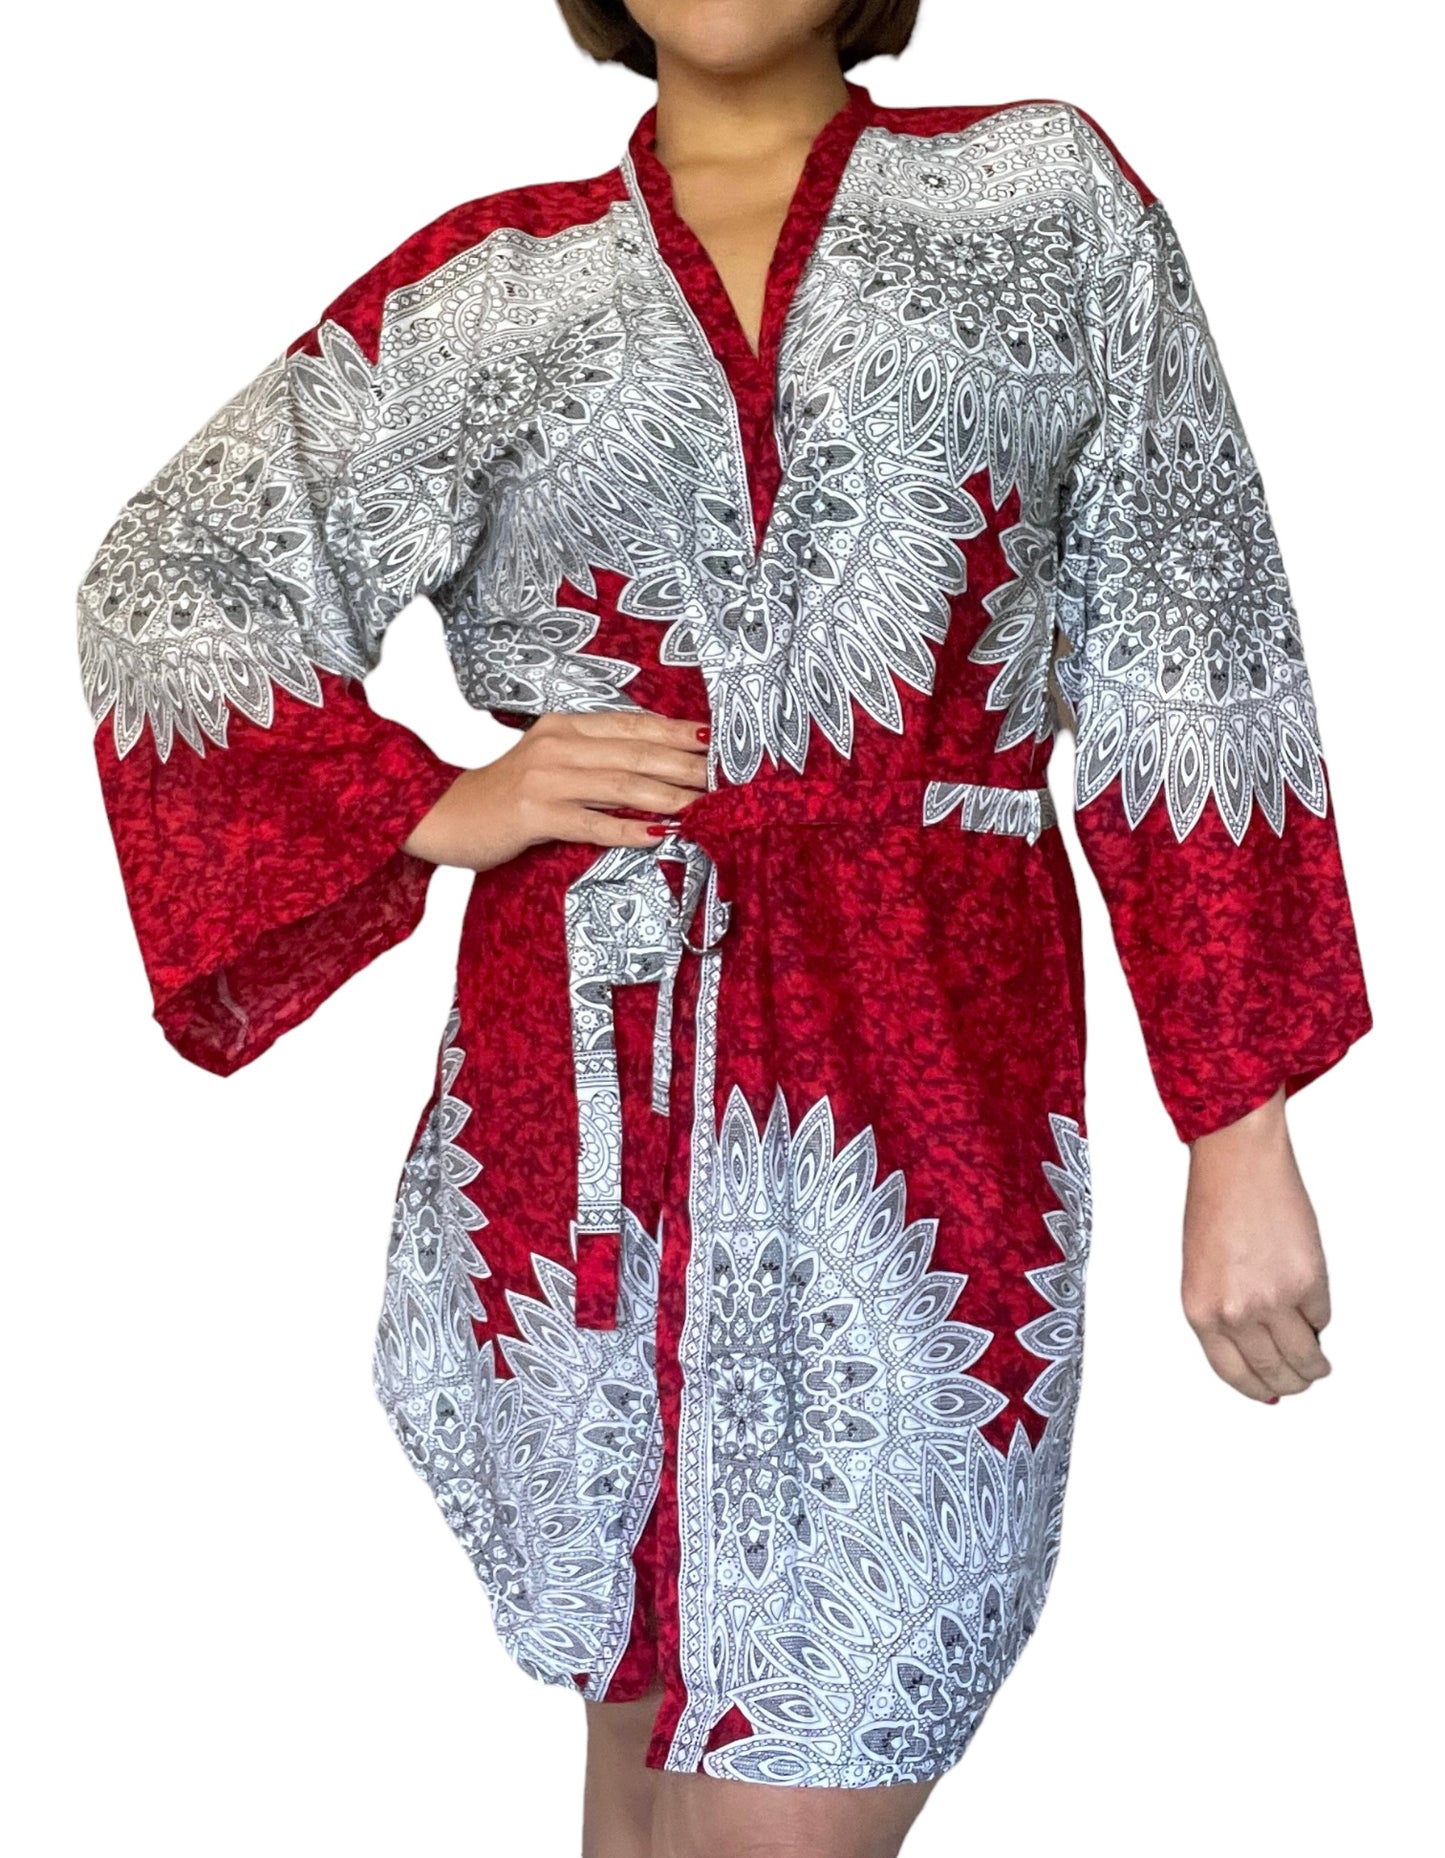 Rad Red Kimono Robes x